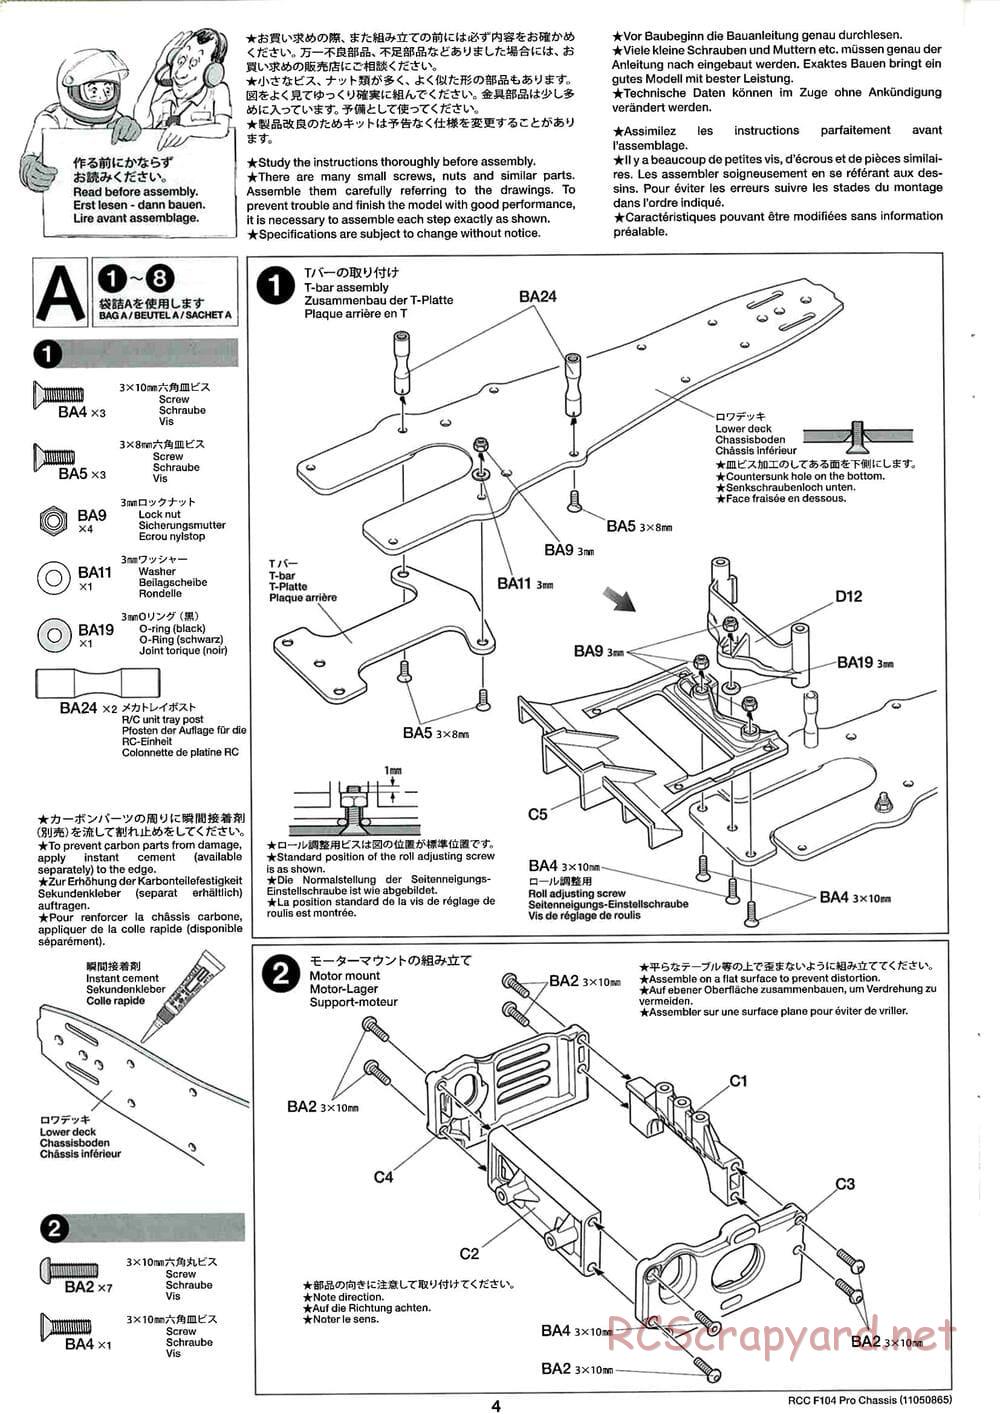 Tamiya - F104 Pro Chassis - Manual - Page 4